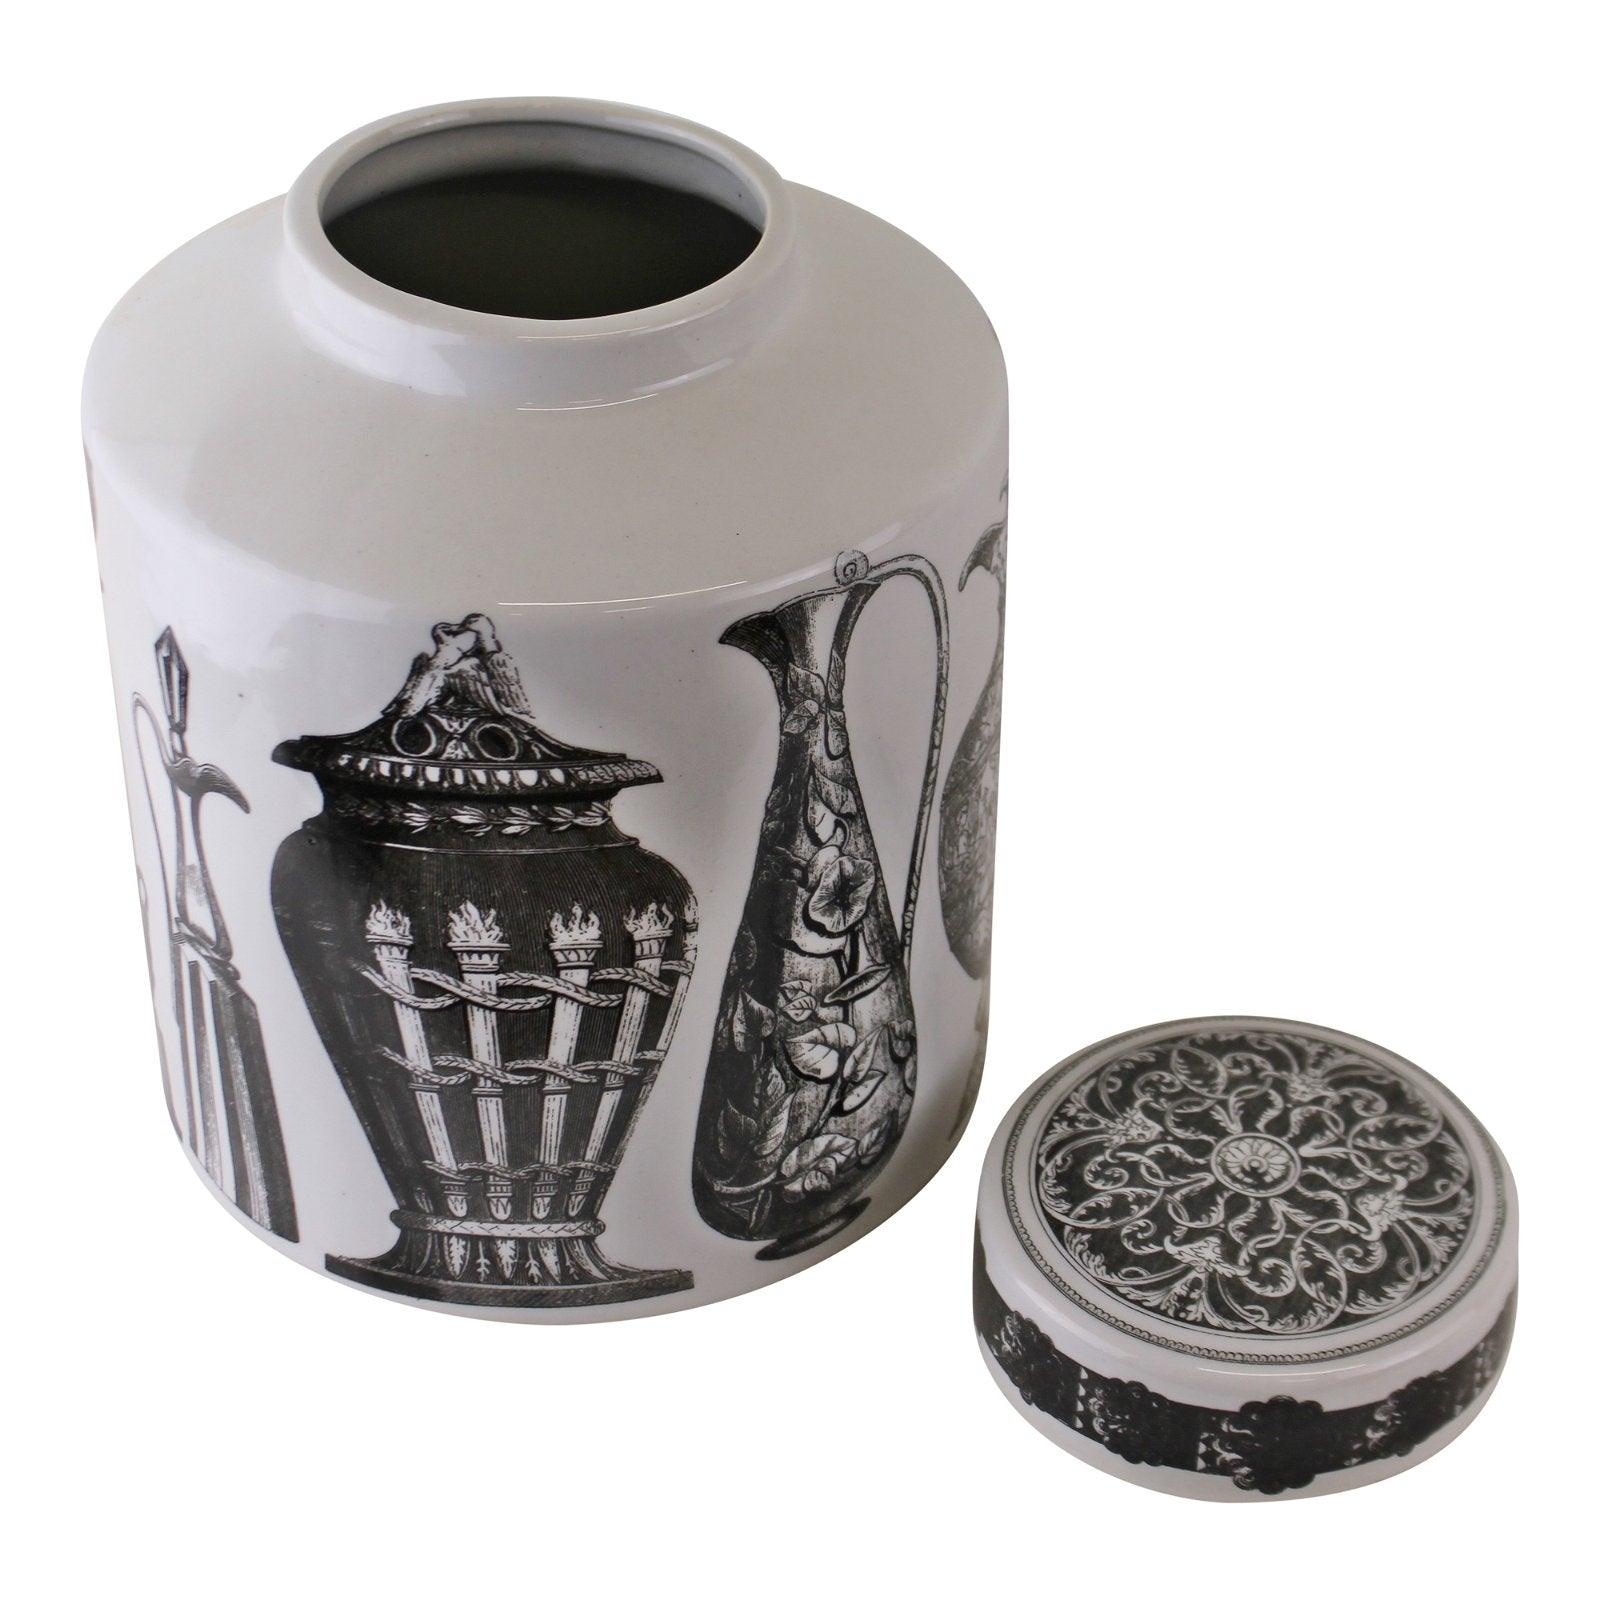 Small Round Grecian Style Porcelain Jar, Grecian Figures - £52.99 - Ceramic Ornaments 